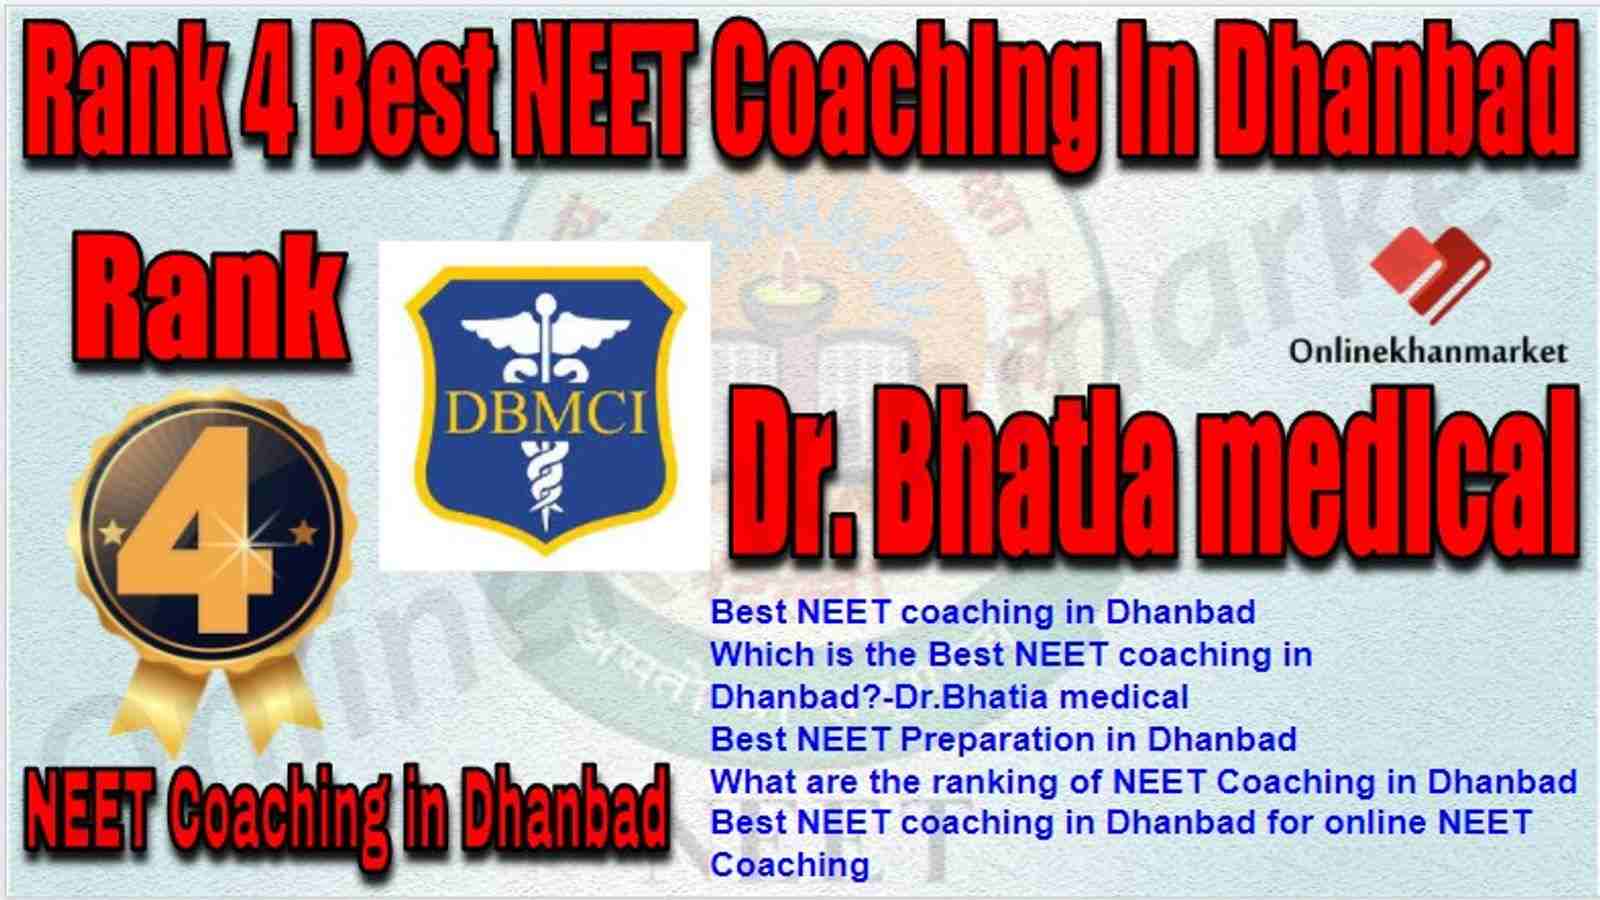 Rank 4 Best NEET Coaching dhanbad